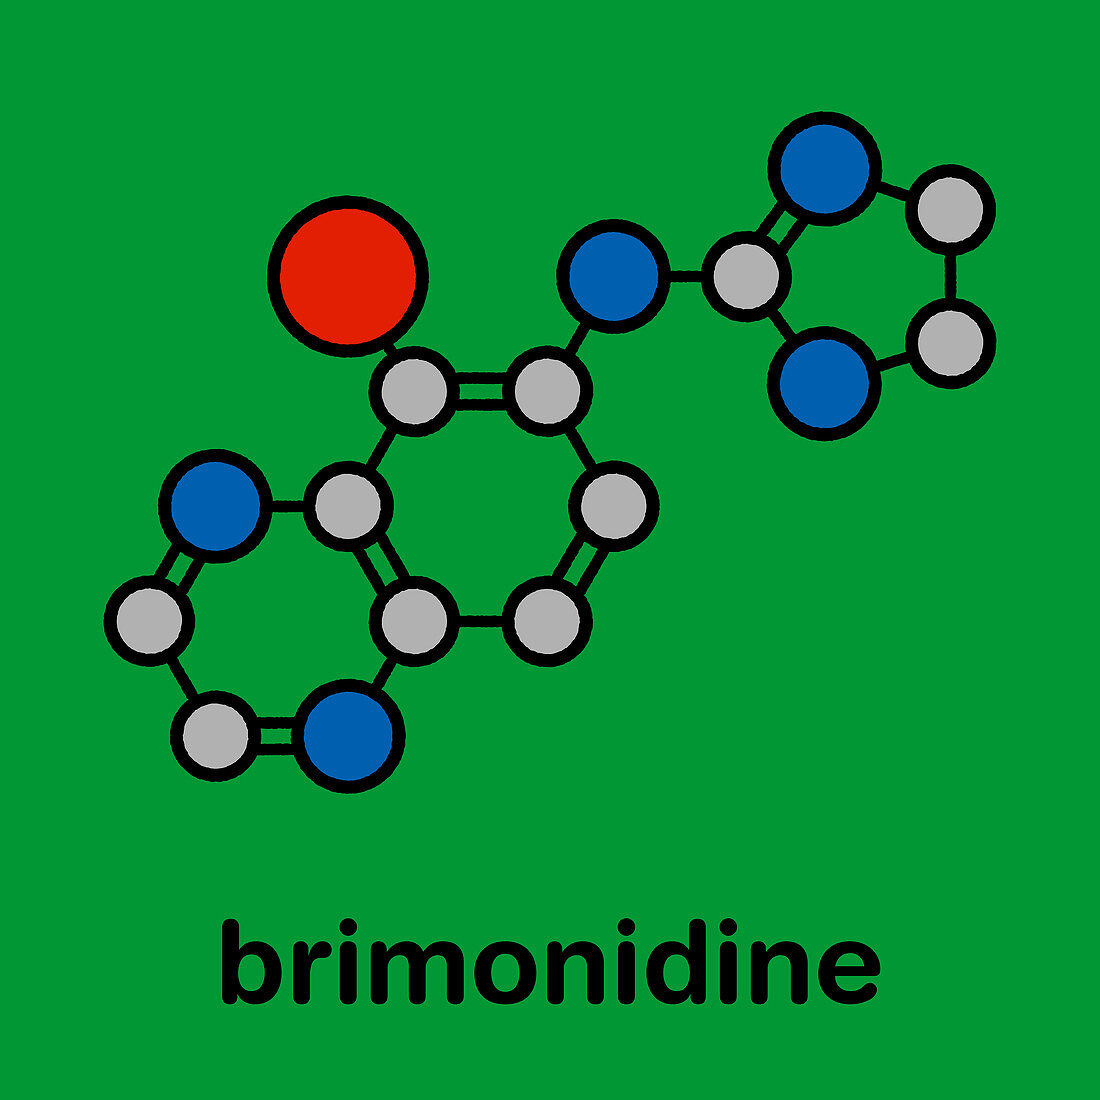 Brimonidine alpha2-adrenergic drug, molecular model